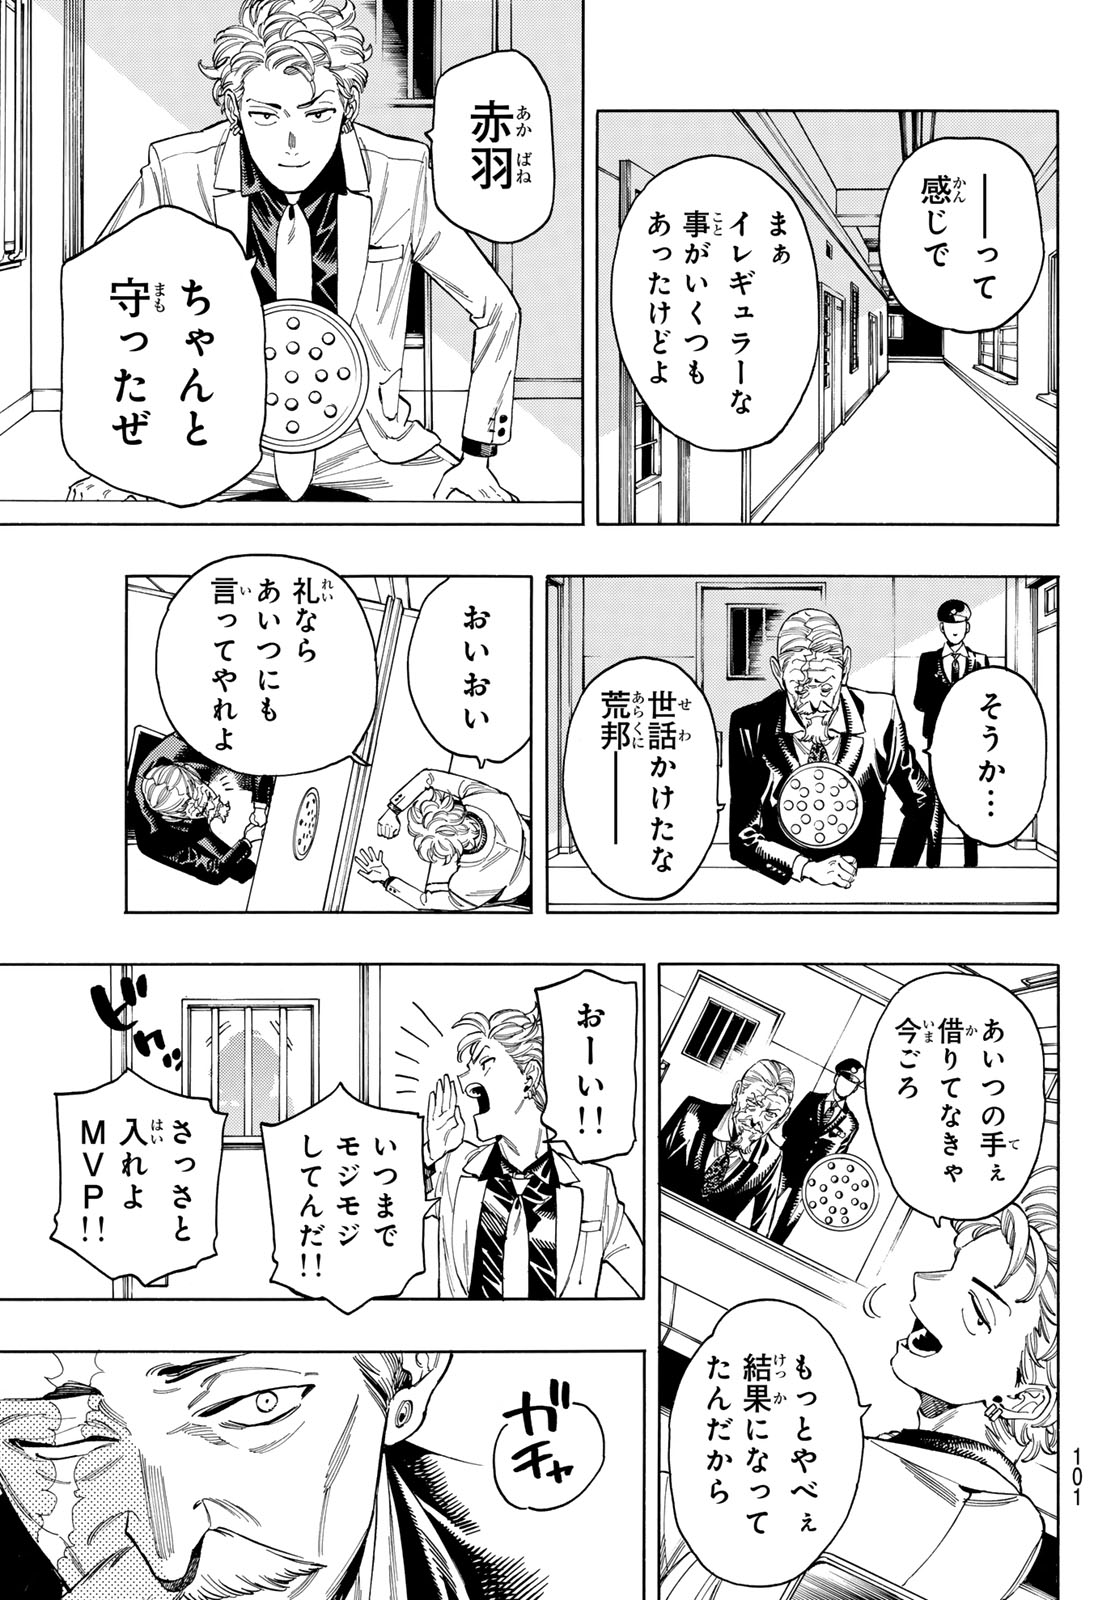 Akabane Honeko no Bodyguard - Chapter 81 - Page 7